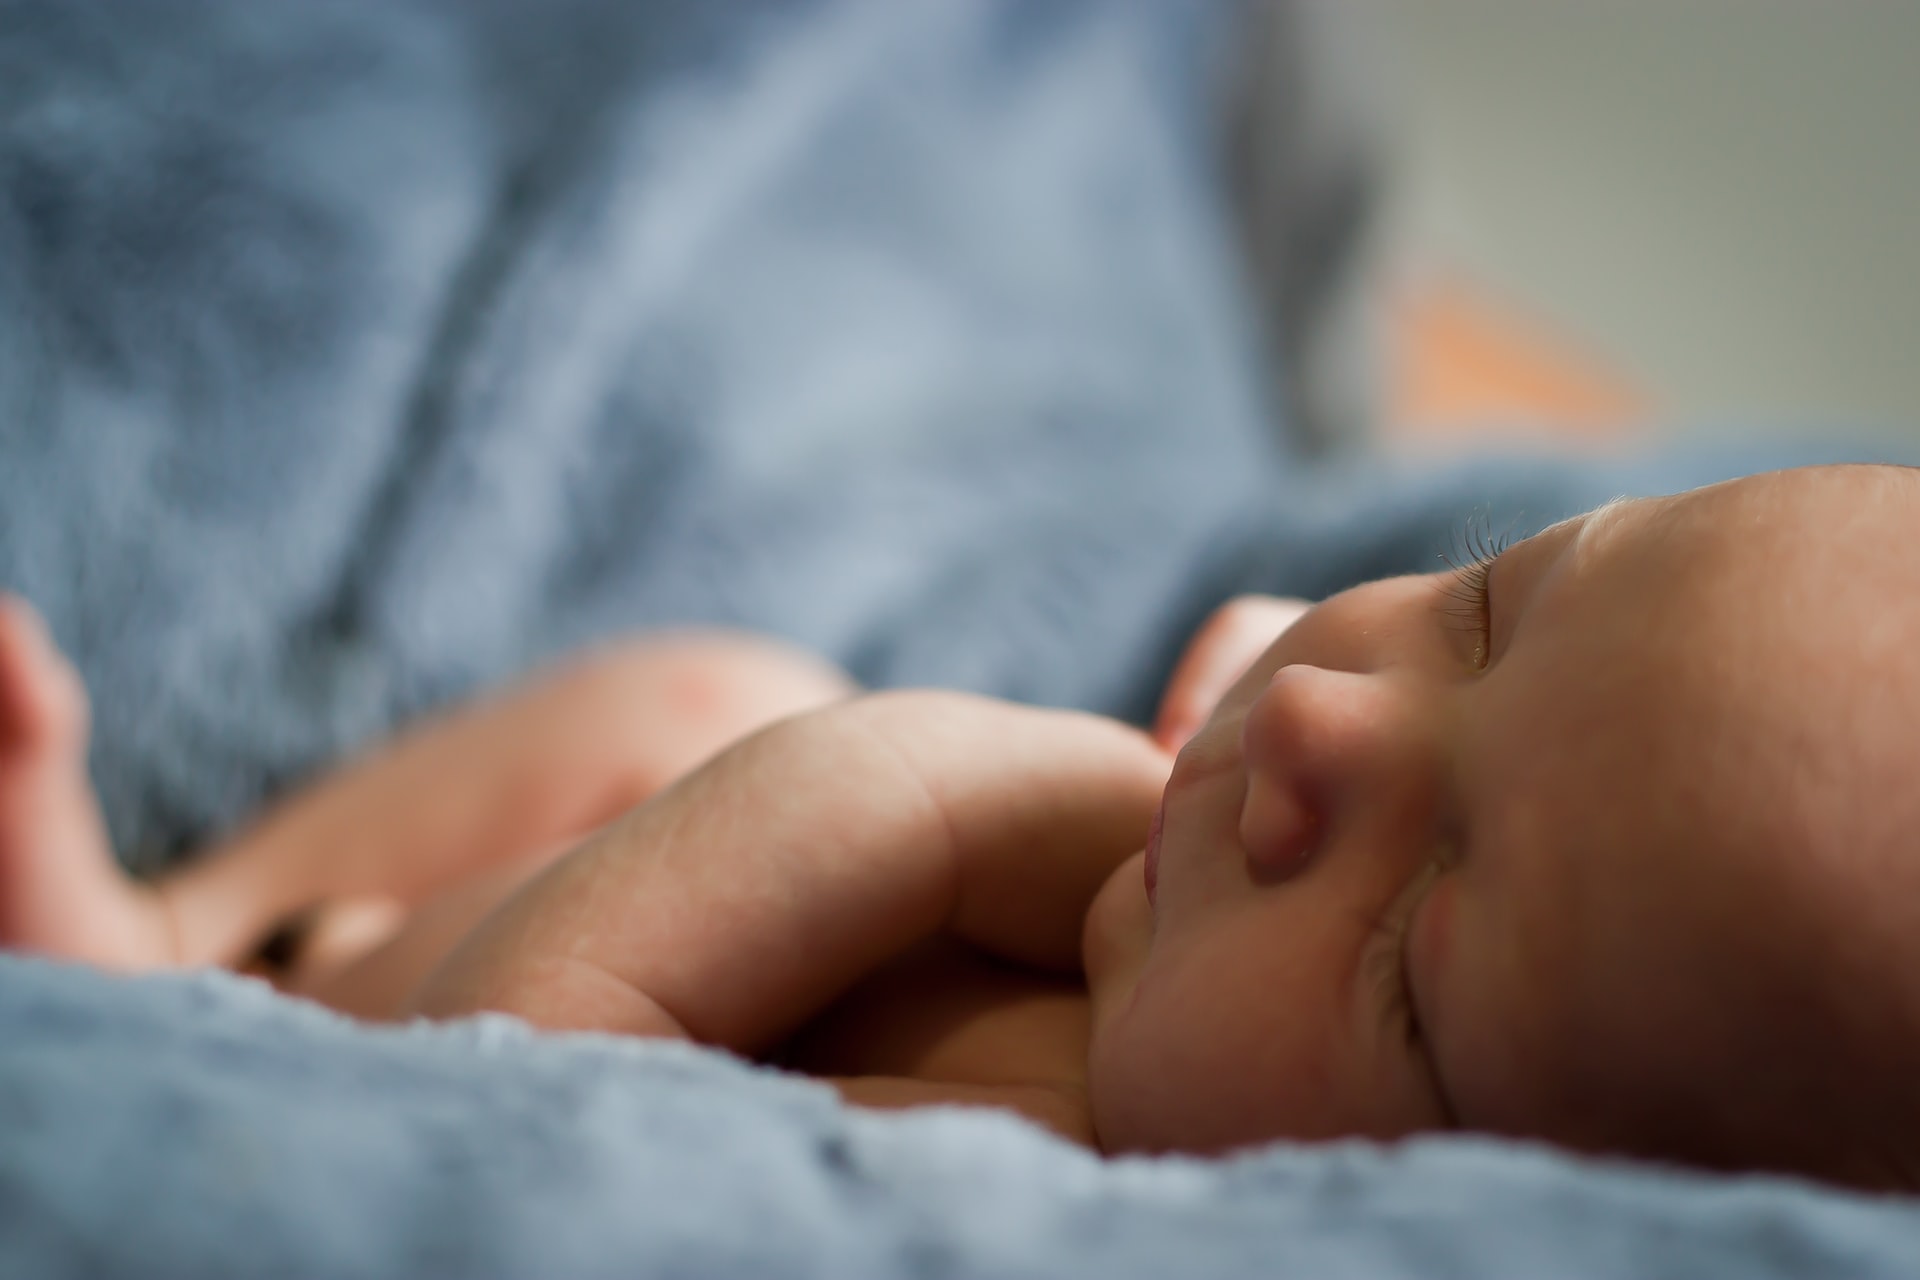 A newborn baby on a blue blanket